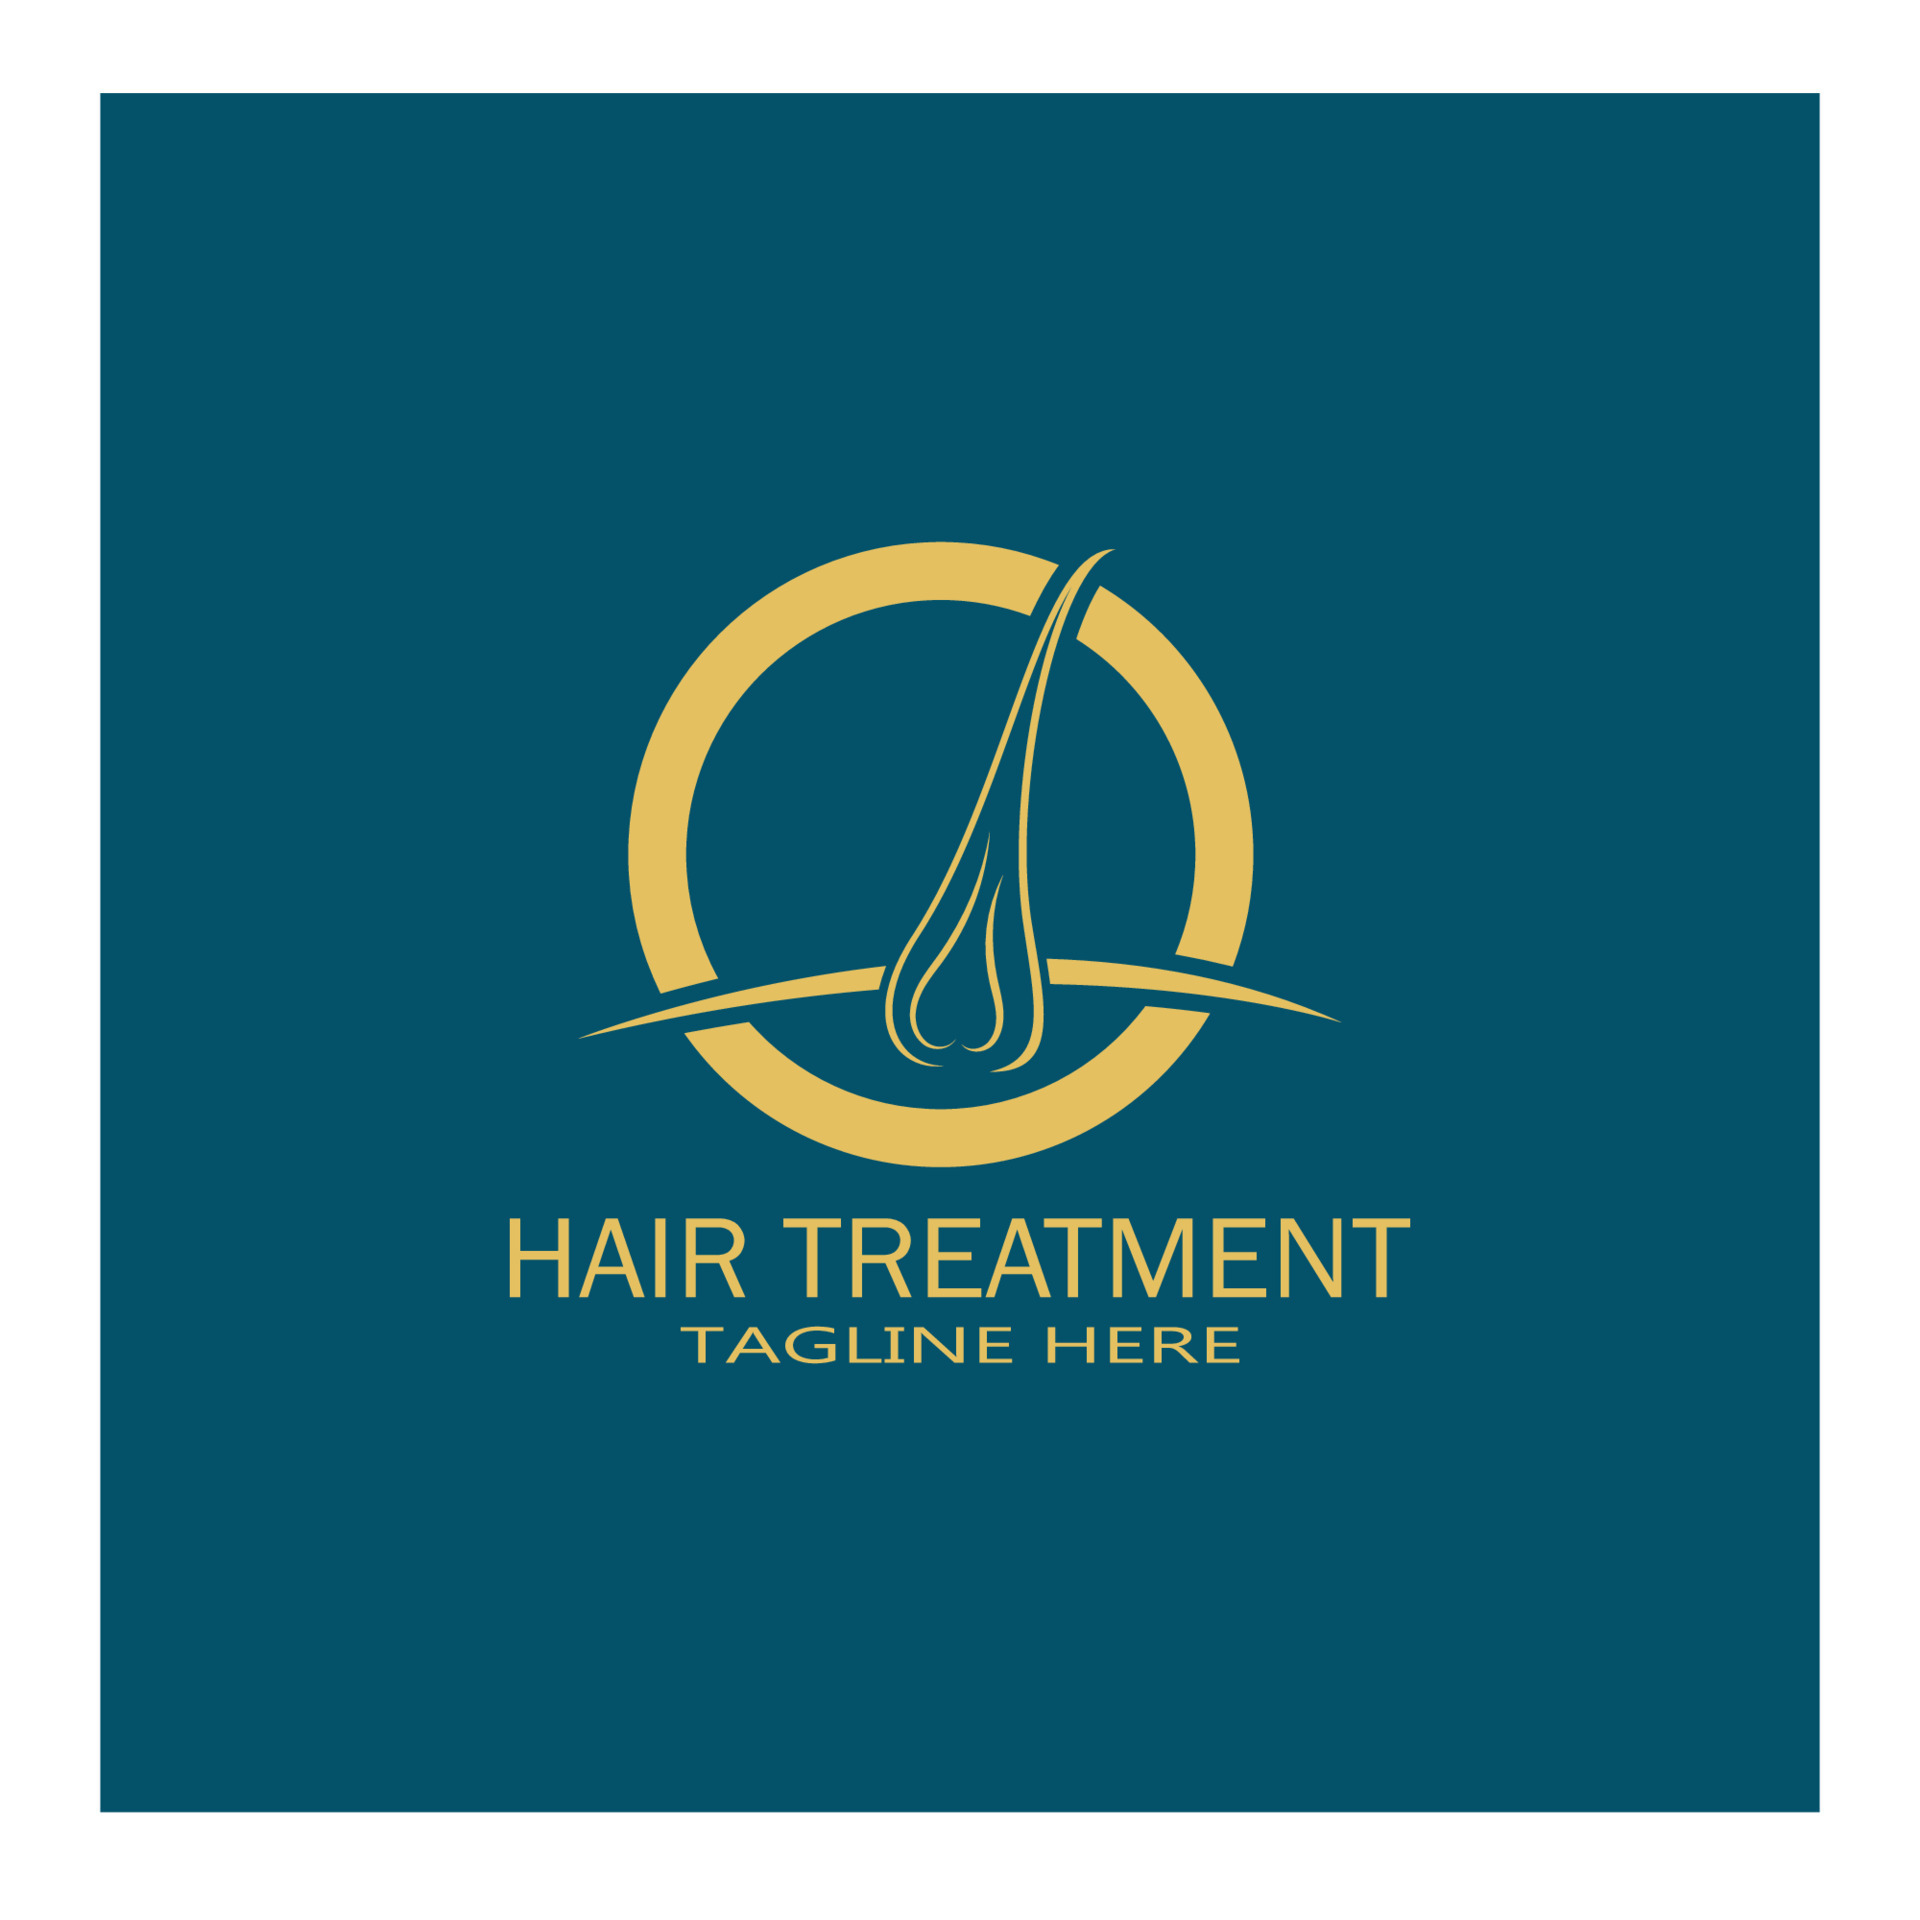 591 Hair Transplant Clinic Logo Images Stock Photos  Vectors   Shutterstock